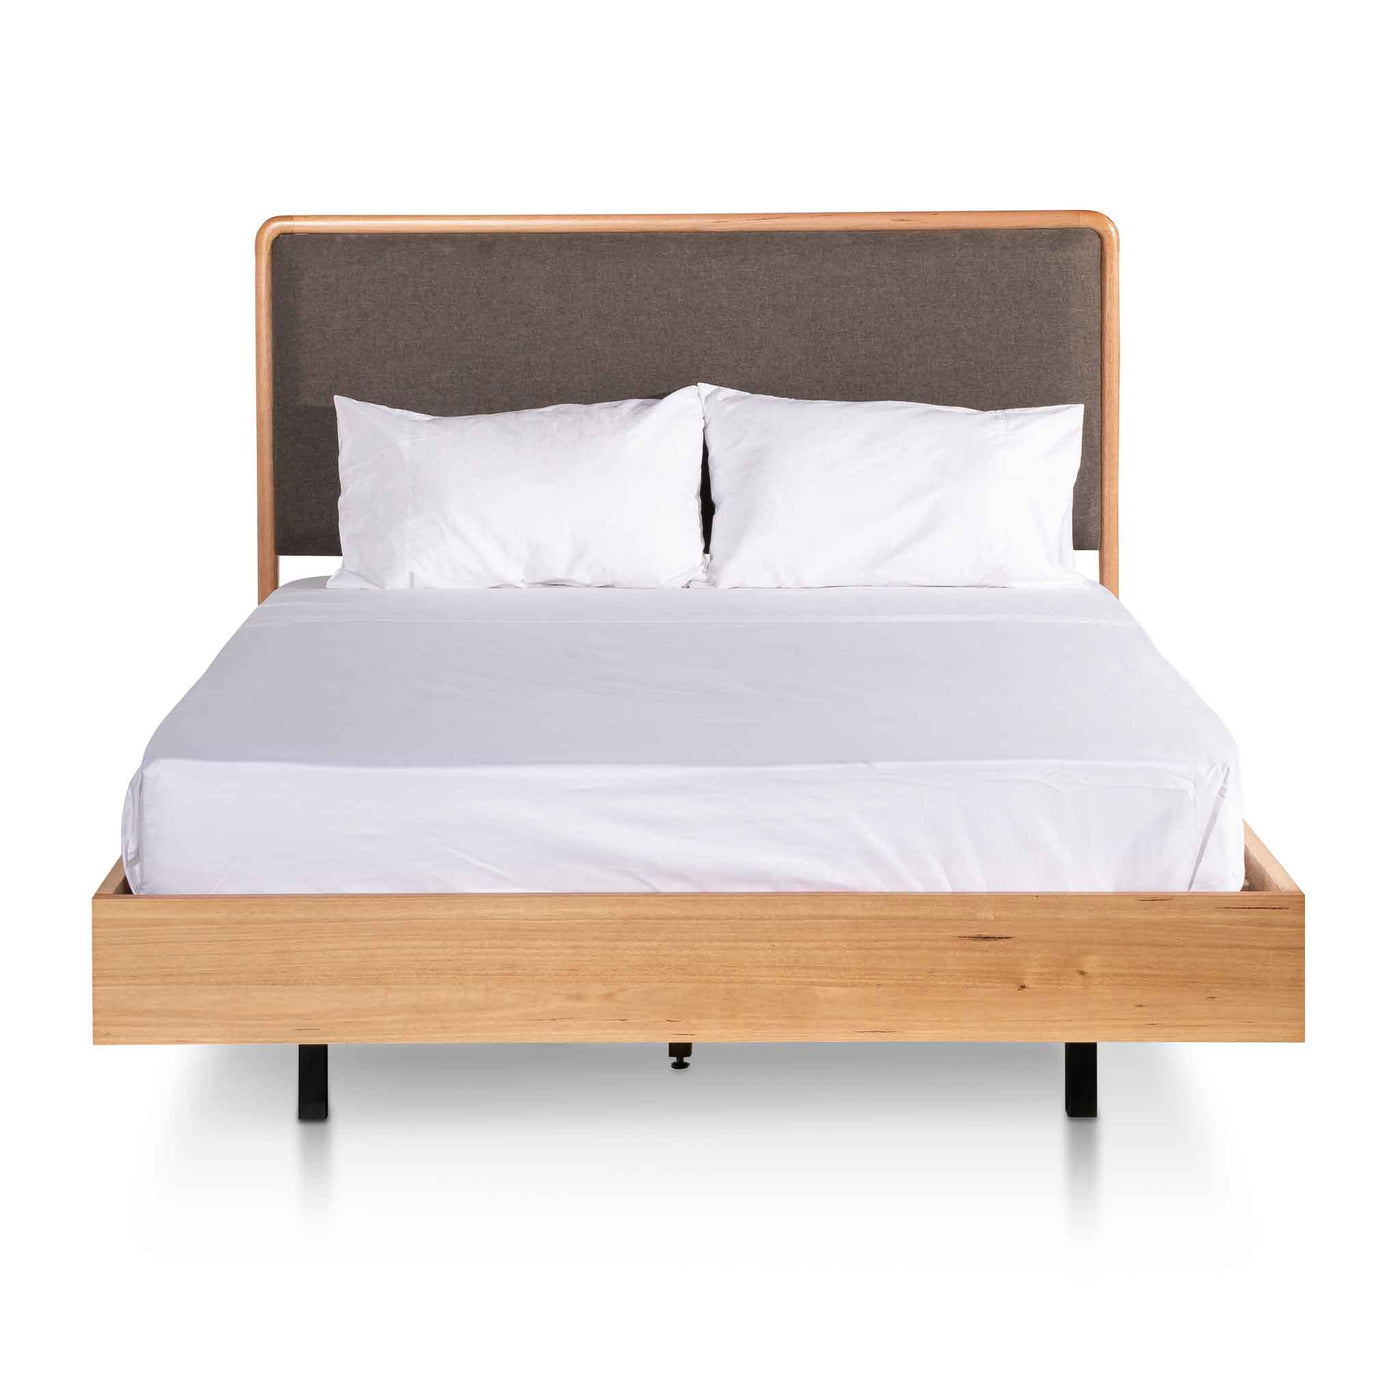 King Sized Bed Frame - Messmate